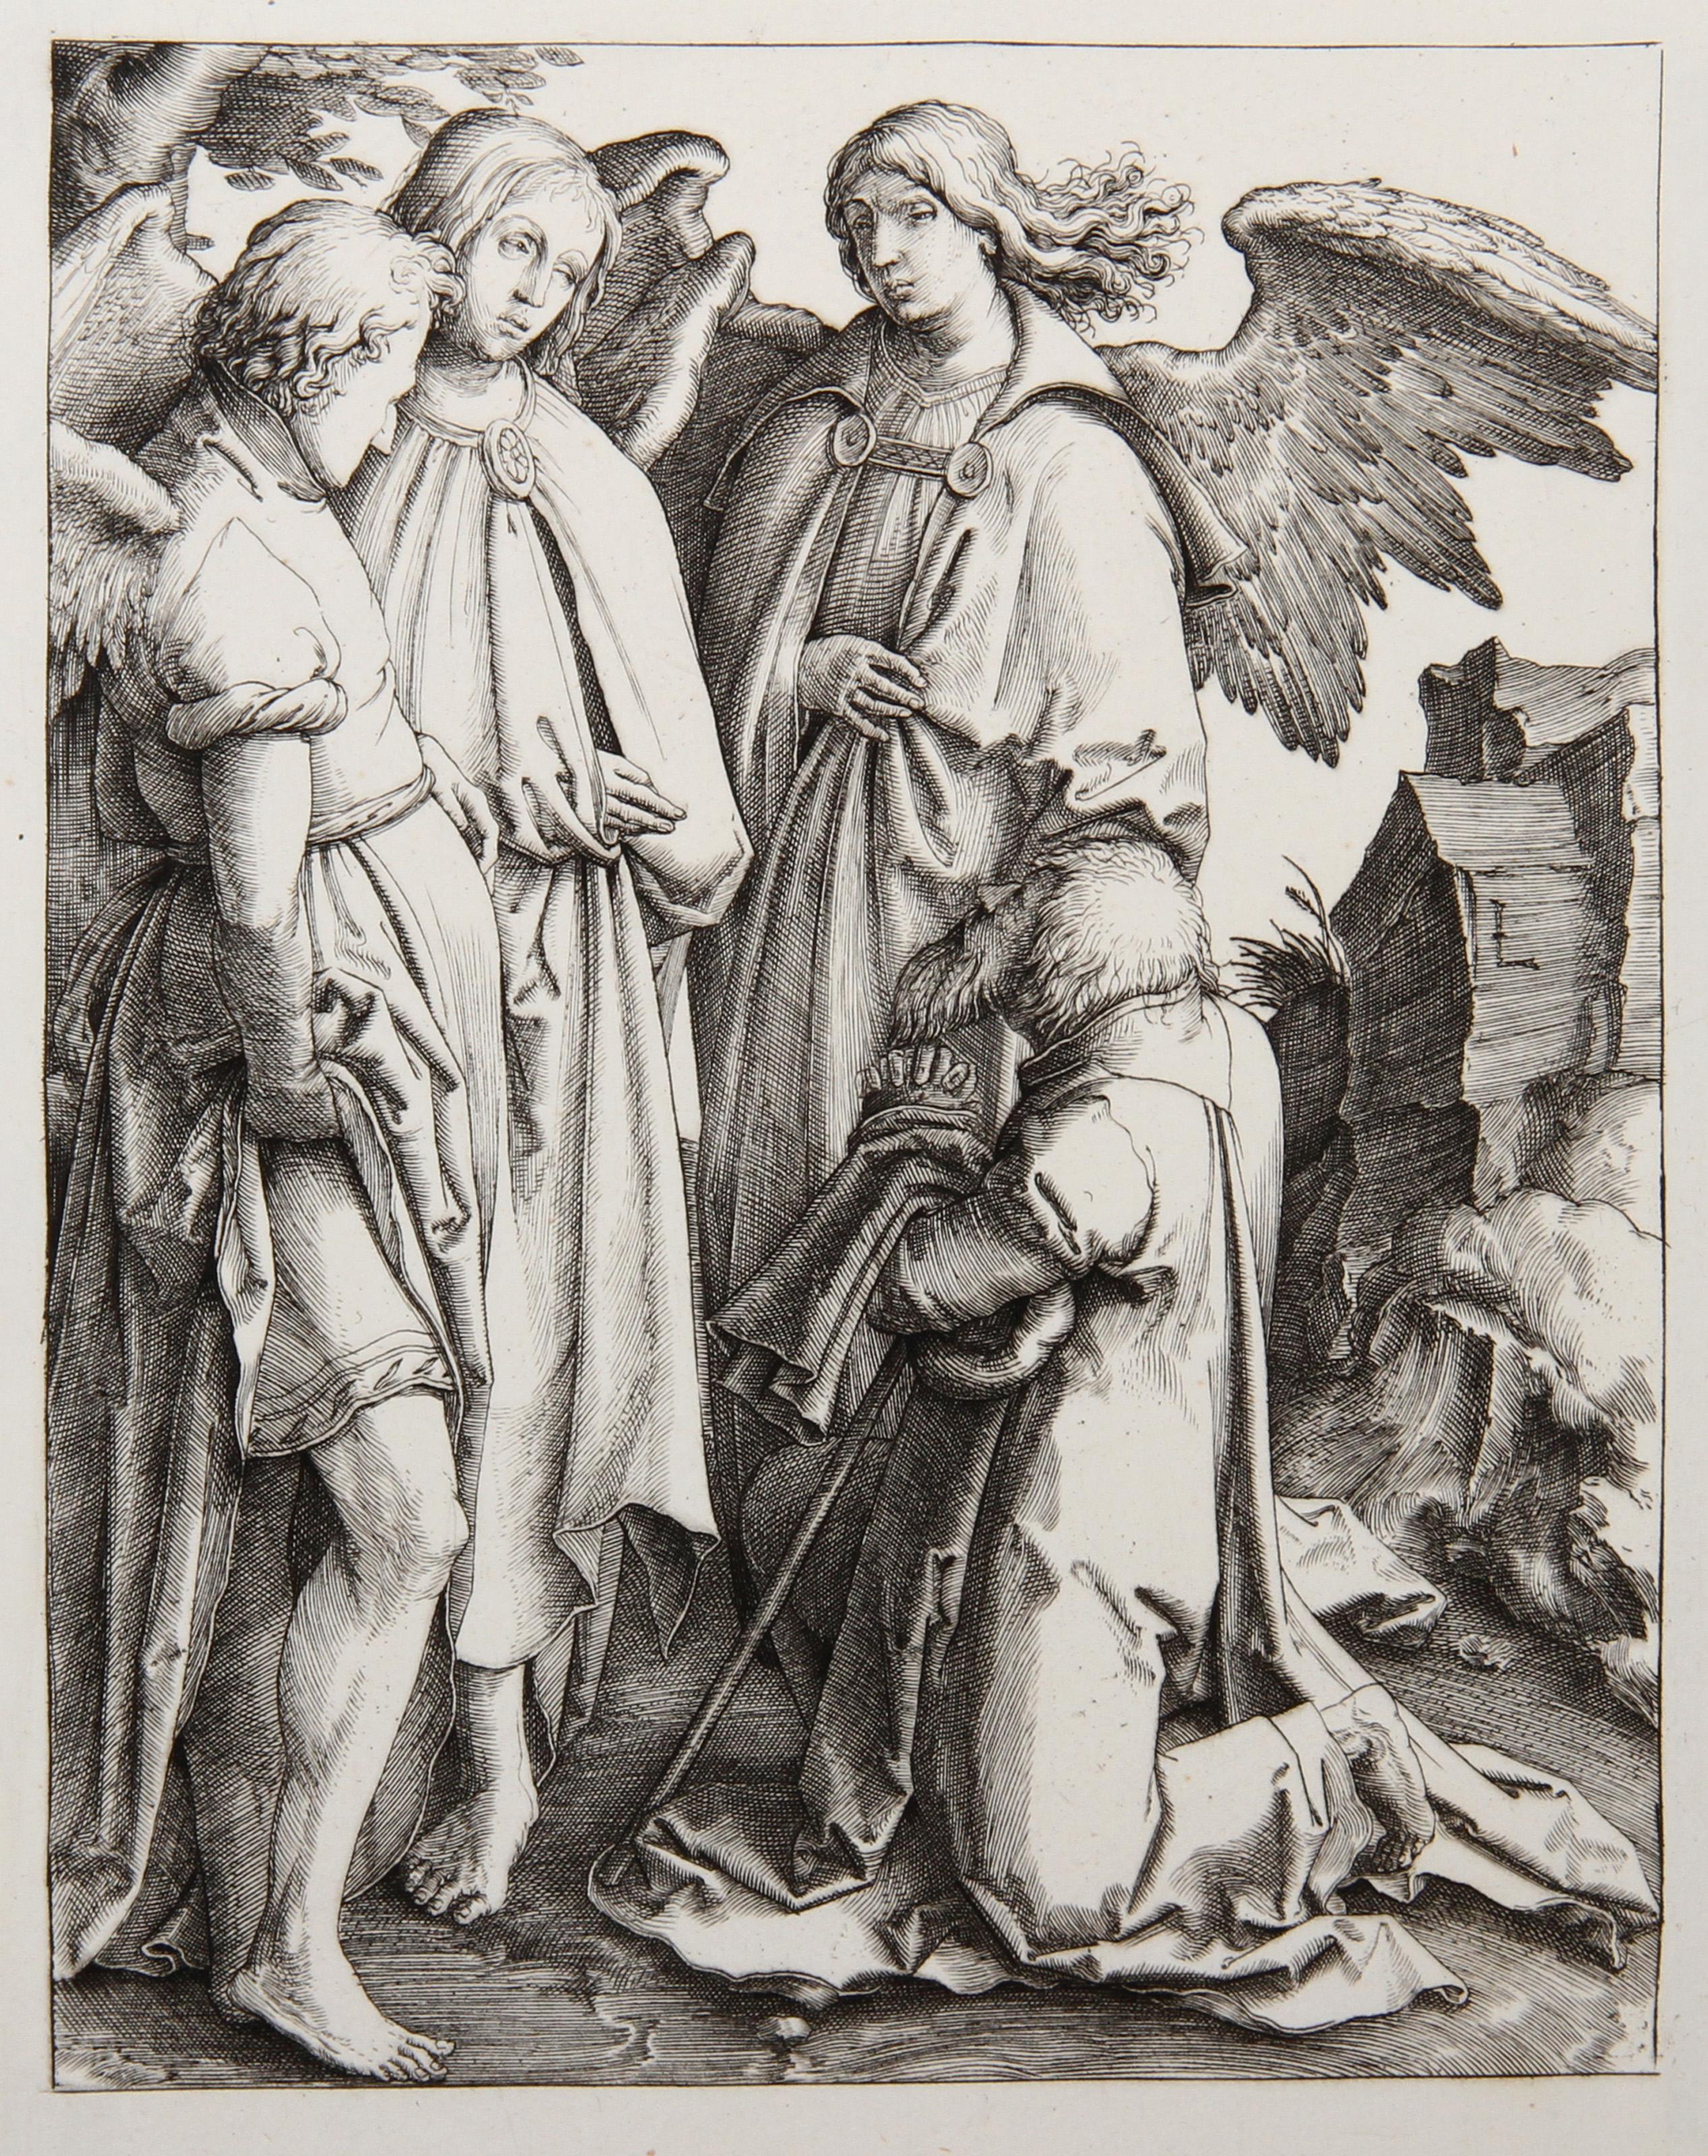 Artist: Lucas van Leyden, After by Amand Durand, Dutch (1494 - 1533) - Abraham et les Trois Anges, Year: 1873, Medium: Heliogravure, Size: 7.5  x 5.75 in. (19.05  x 14.61 cm), Printer: Amand Durand, Description: French Engraver and painter Charles